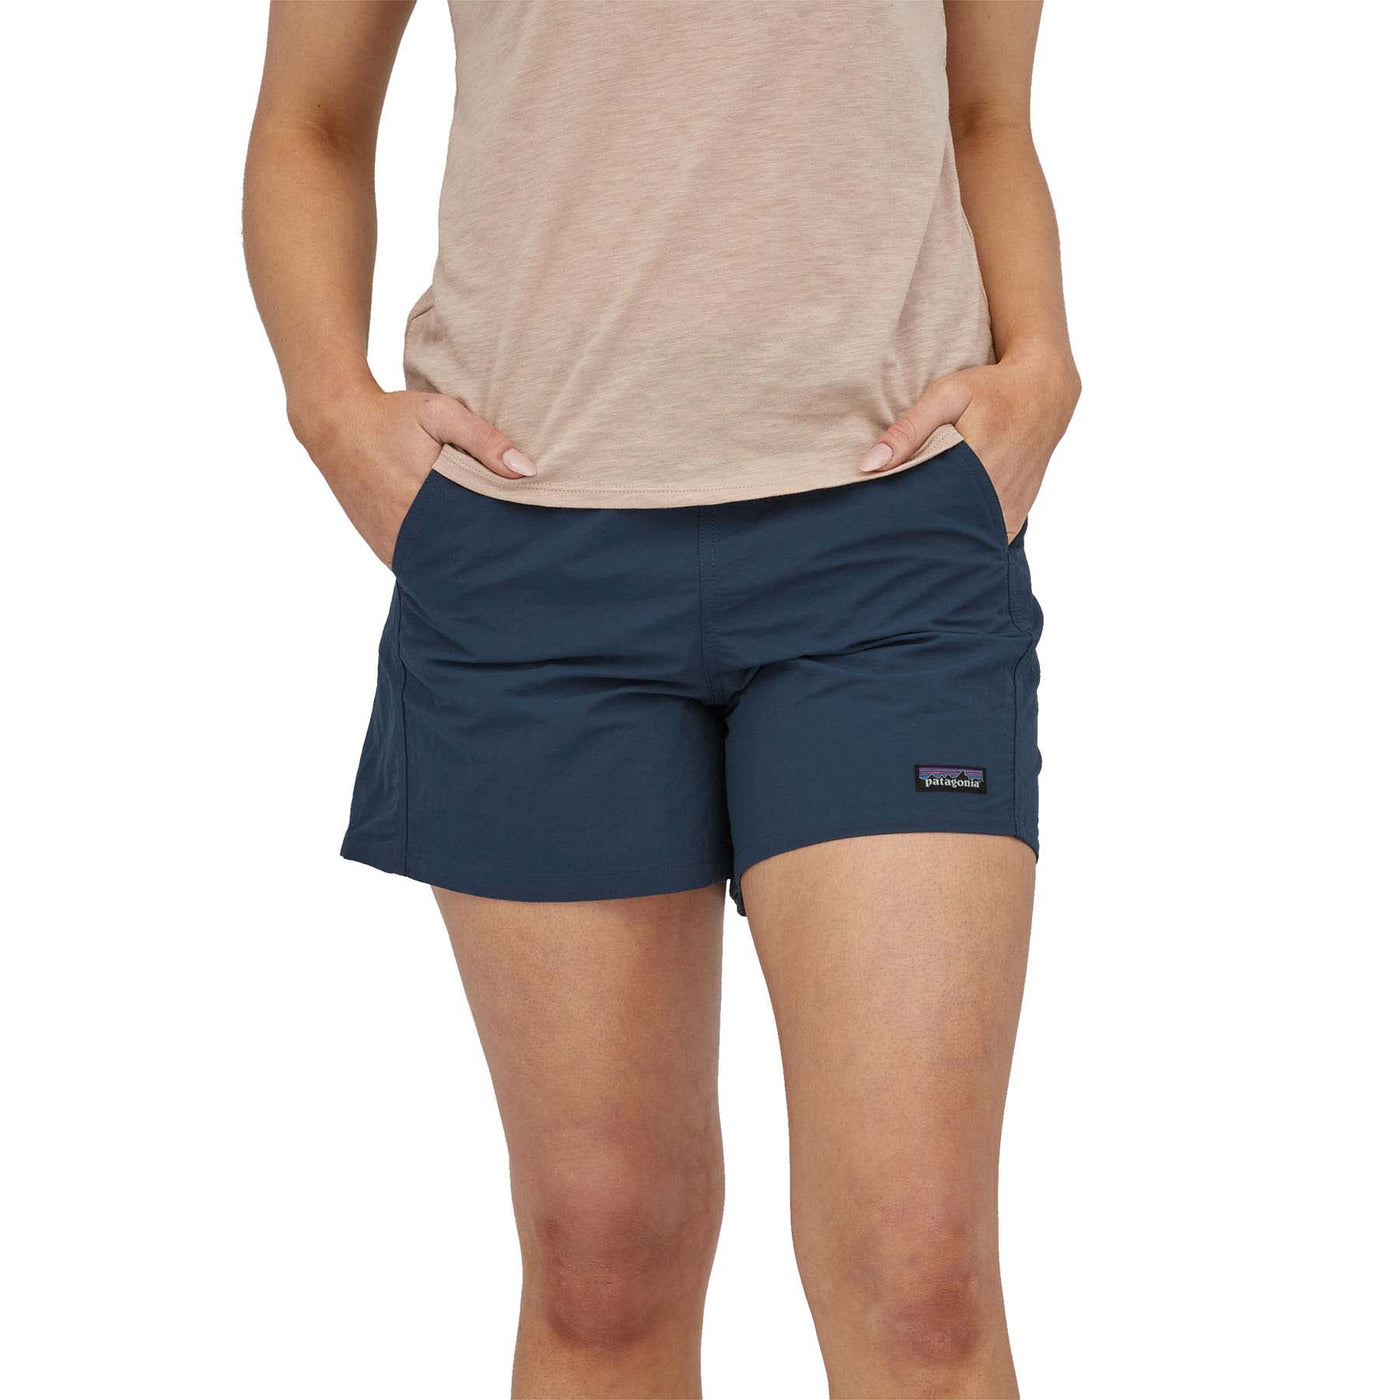 Patagonia Women's Baggies Shorts - 5 in. 2023 